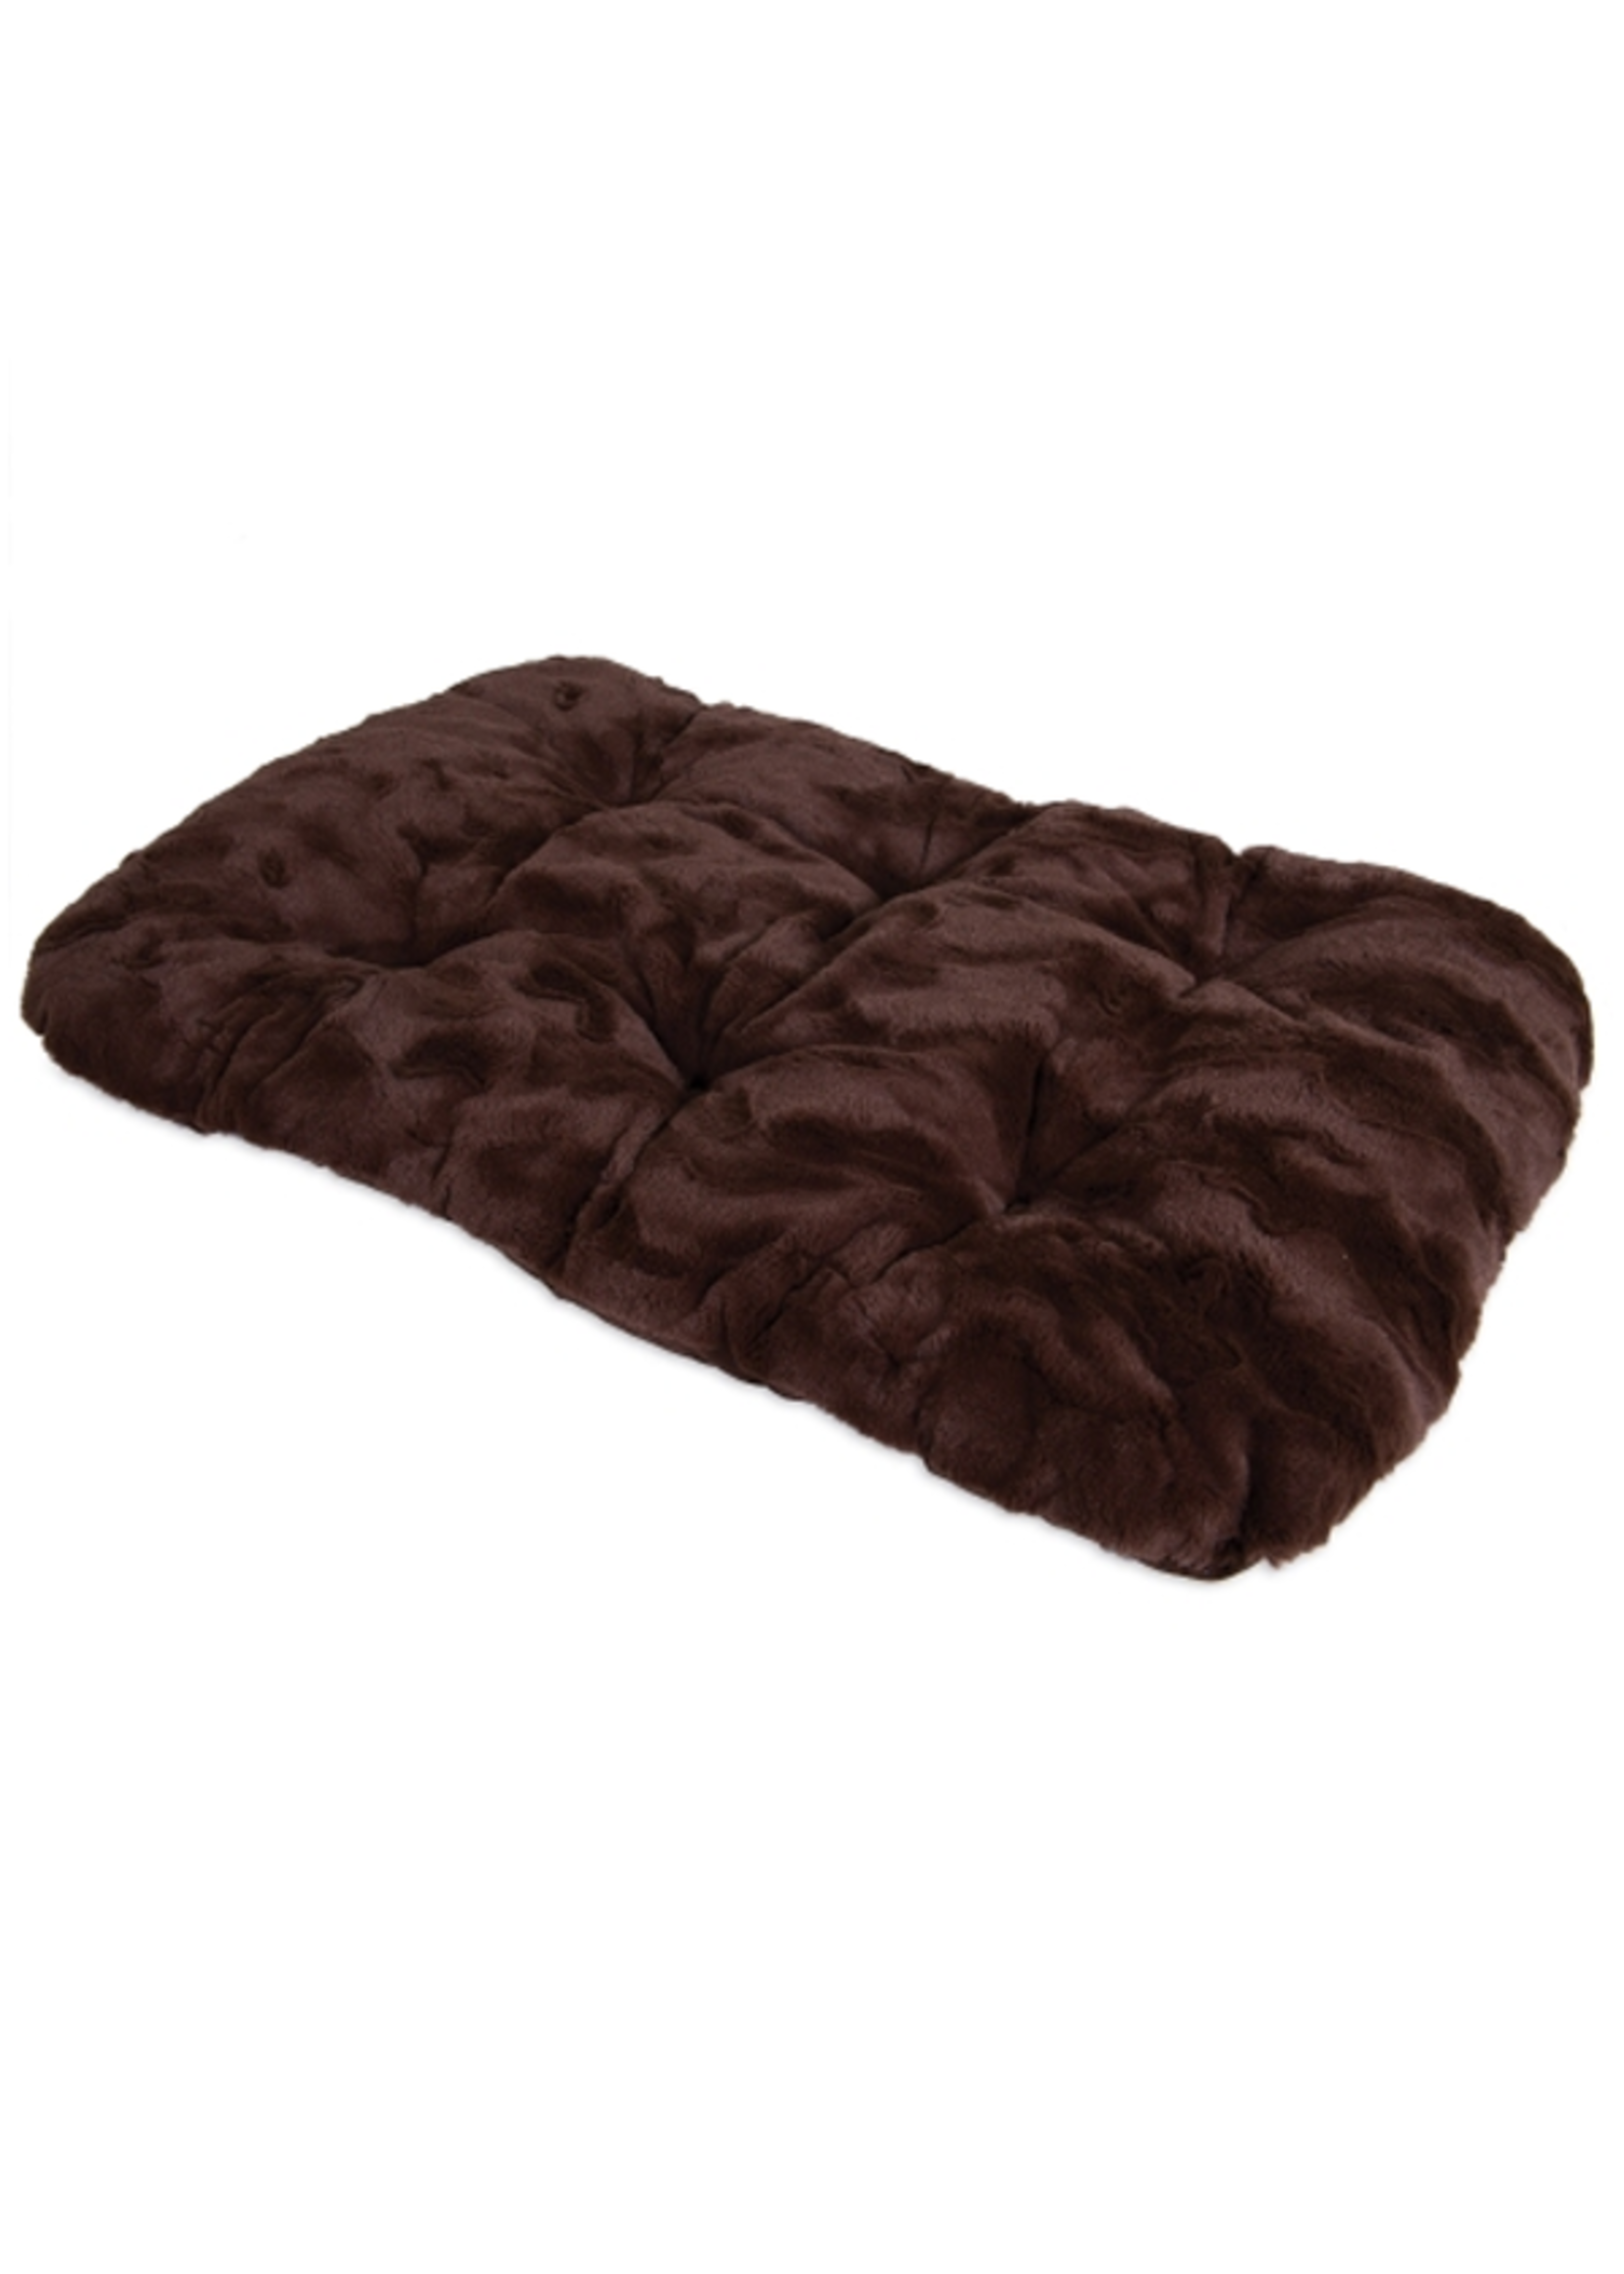 Precision Precision - SnooZZy Cozy Comforter Brown